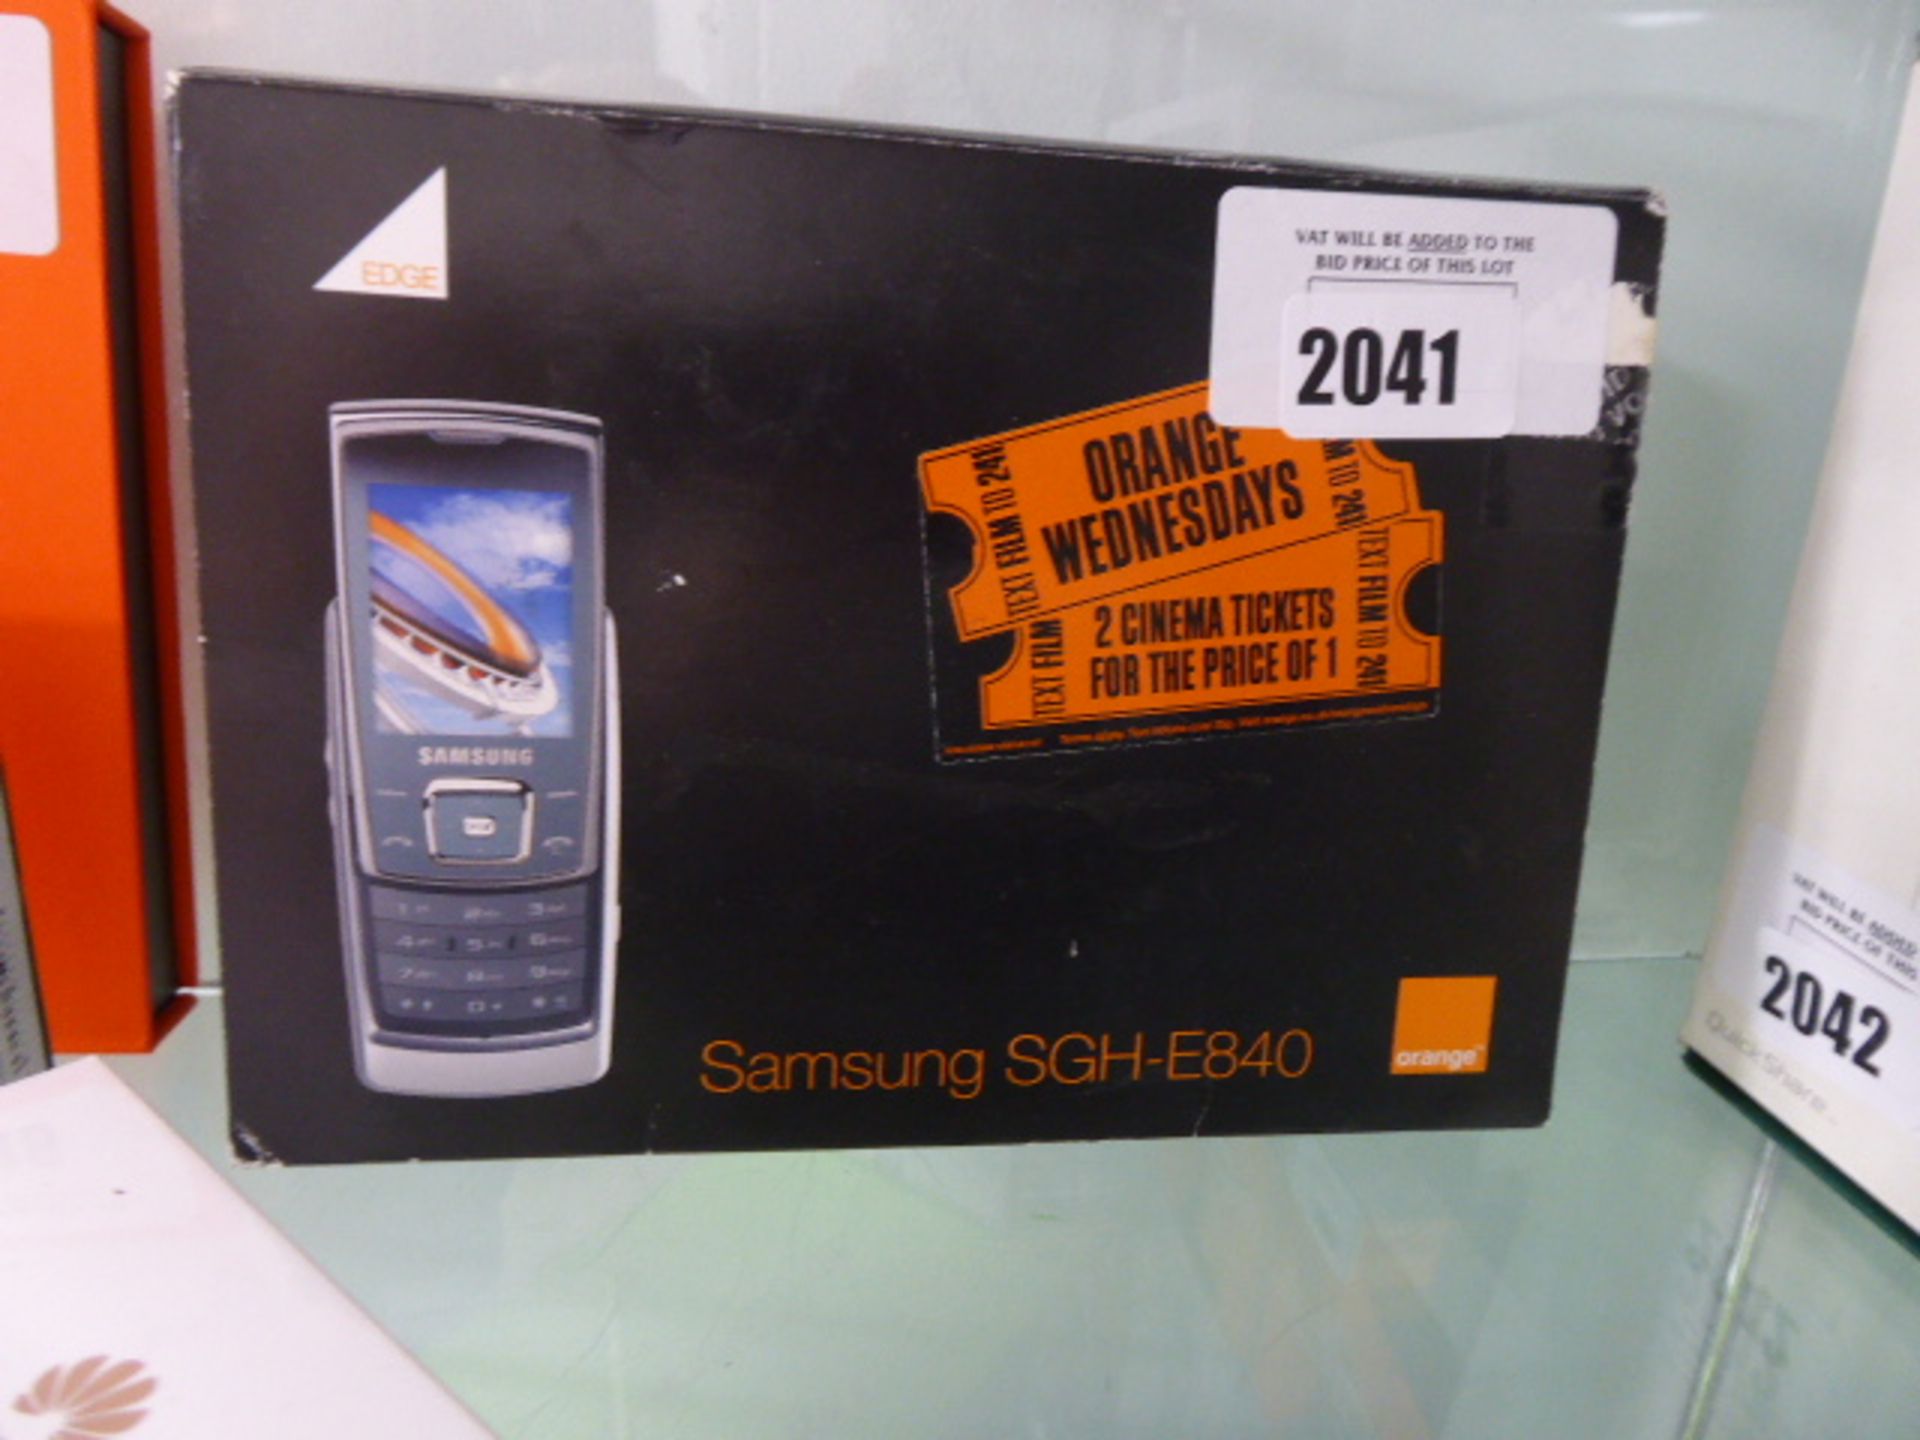 A Samsung SGH-E840 mobile phone on Orange in box